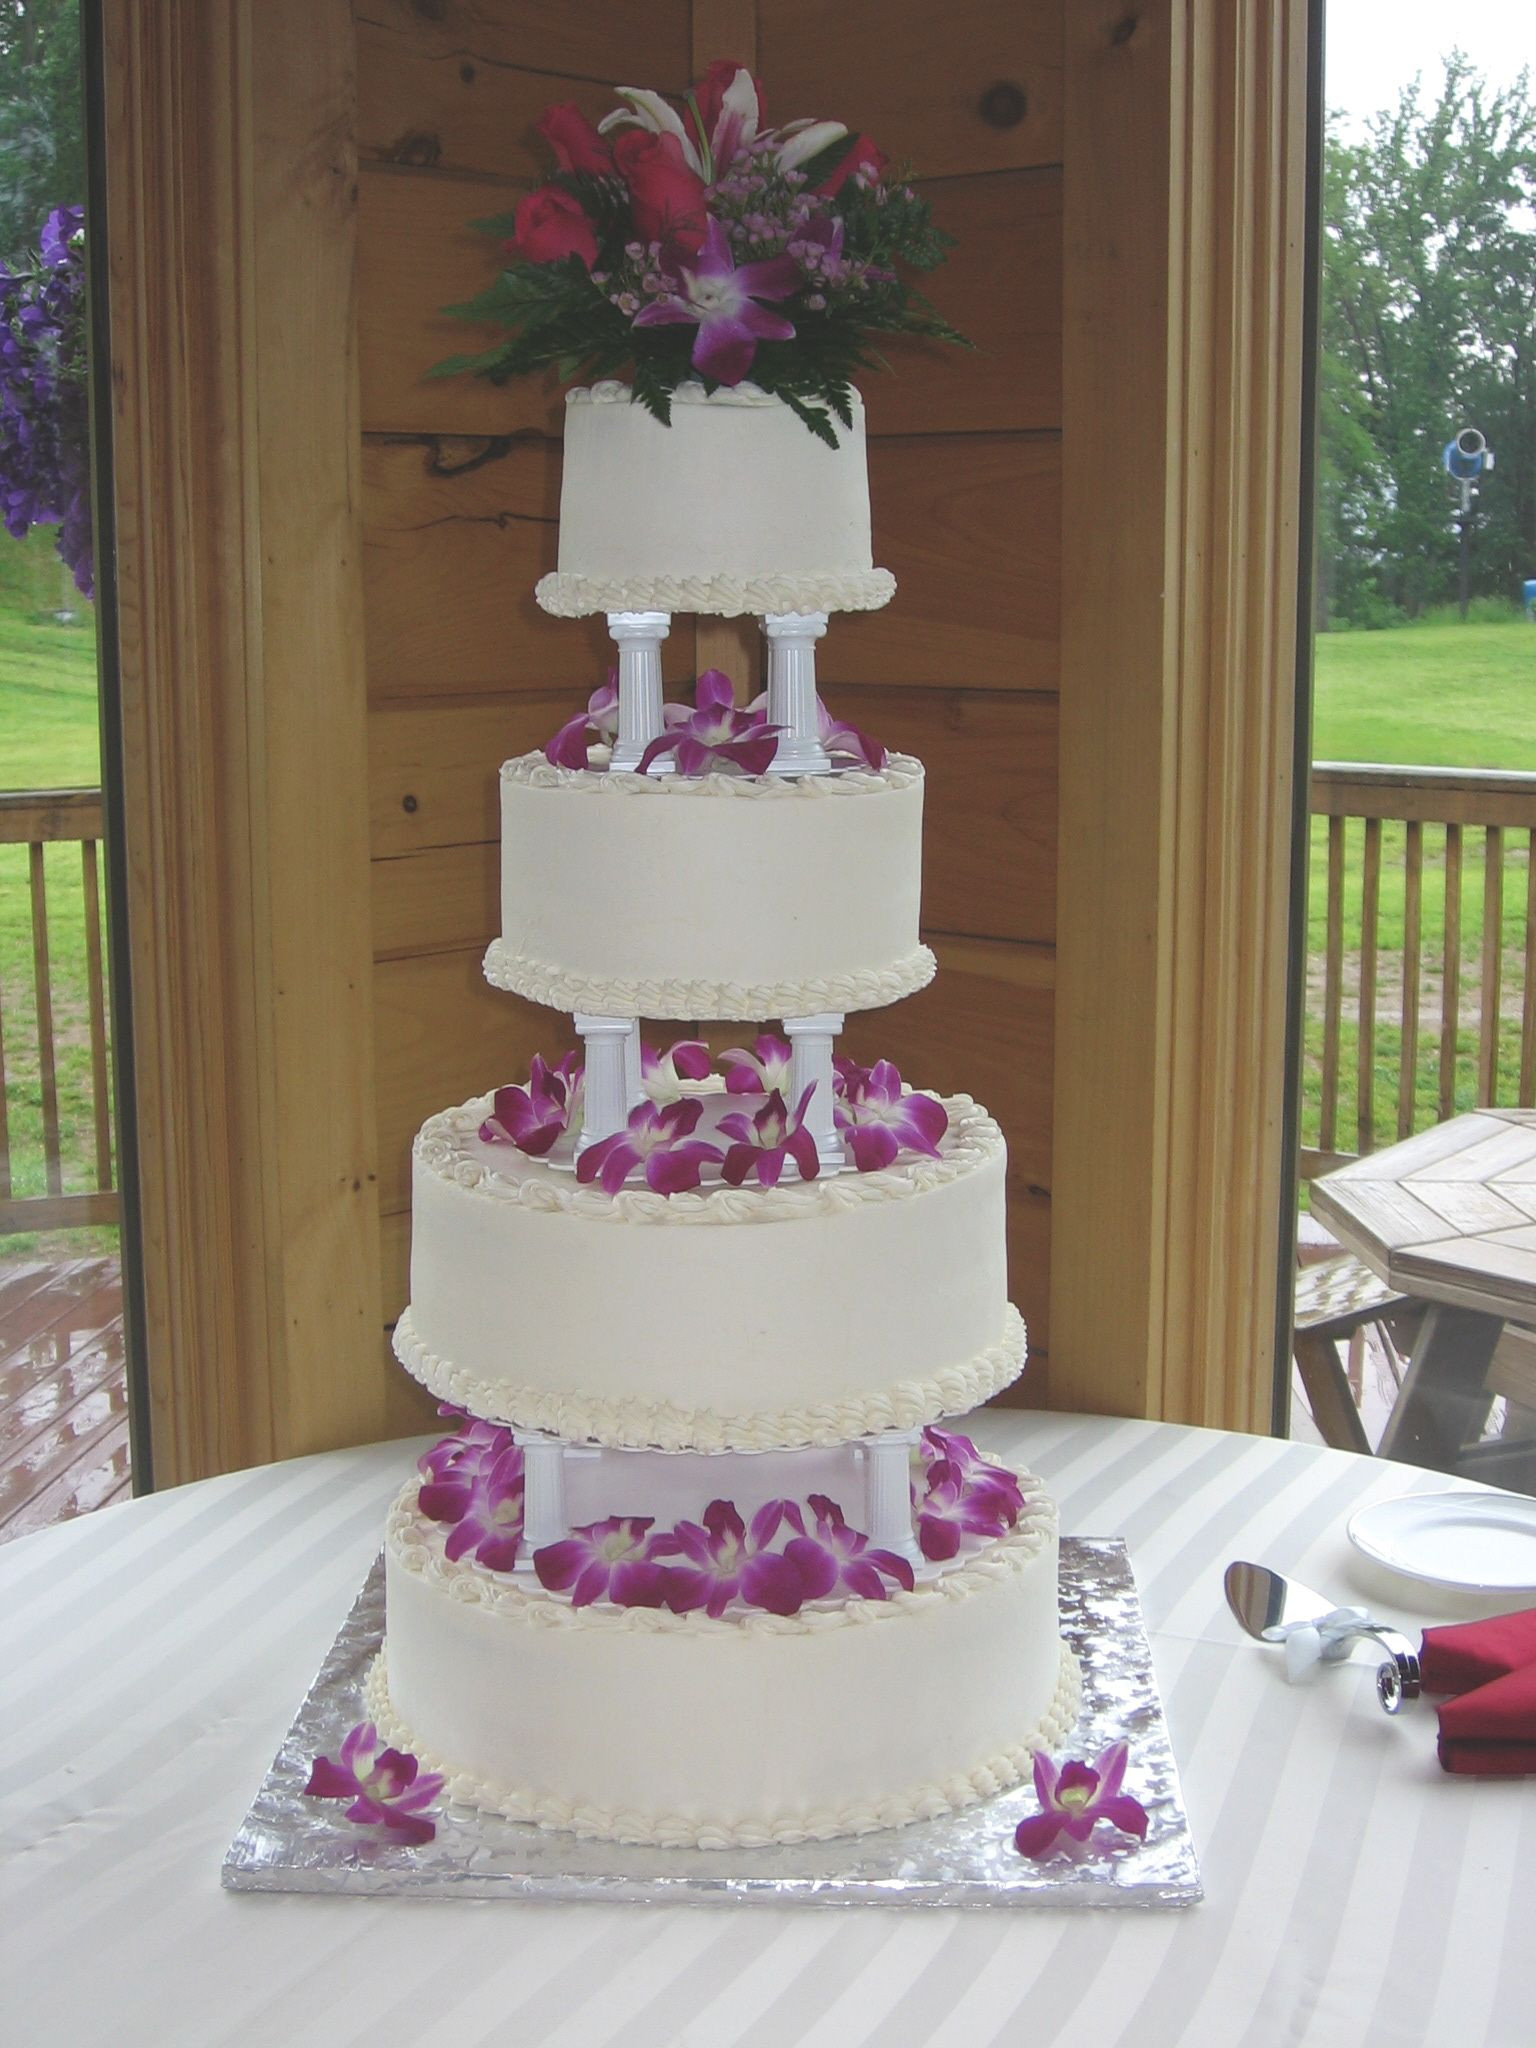 Wedding Cake Pillars
 4 Tier Round Buttercream Wedding Cake with Pillars